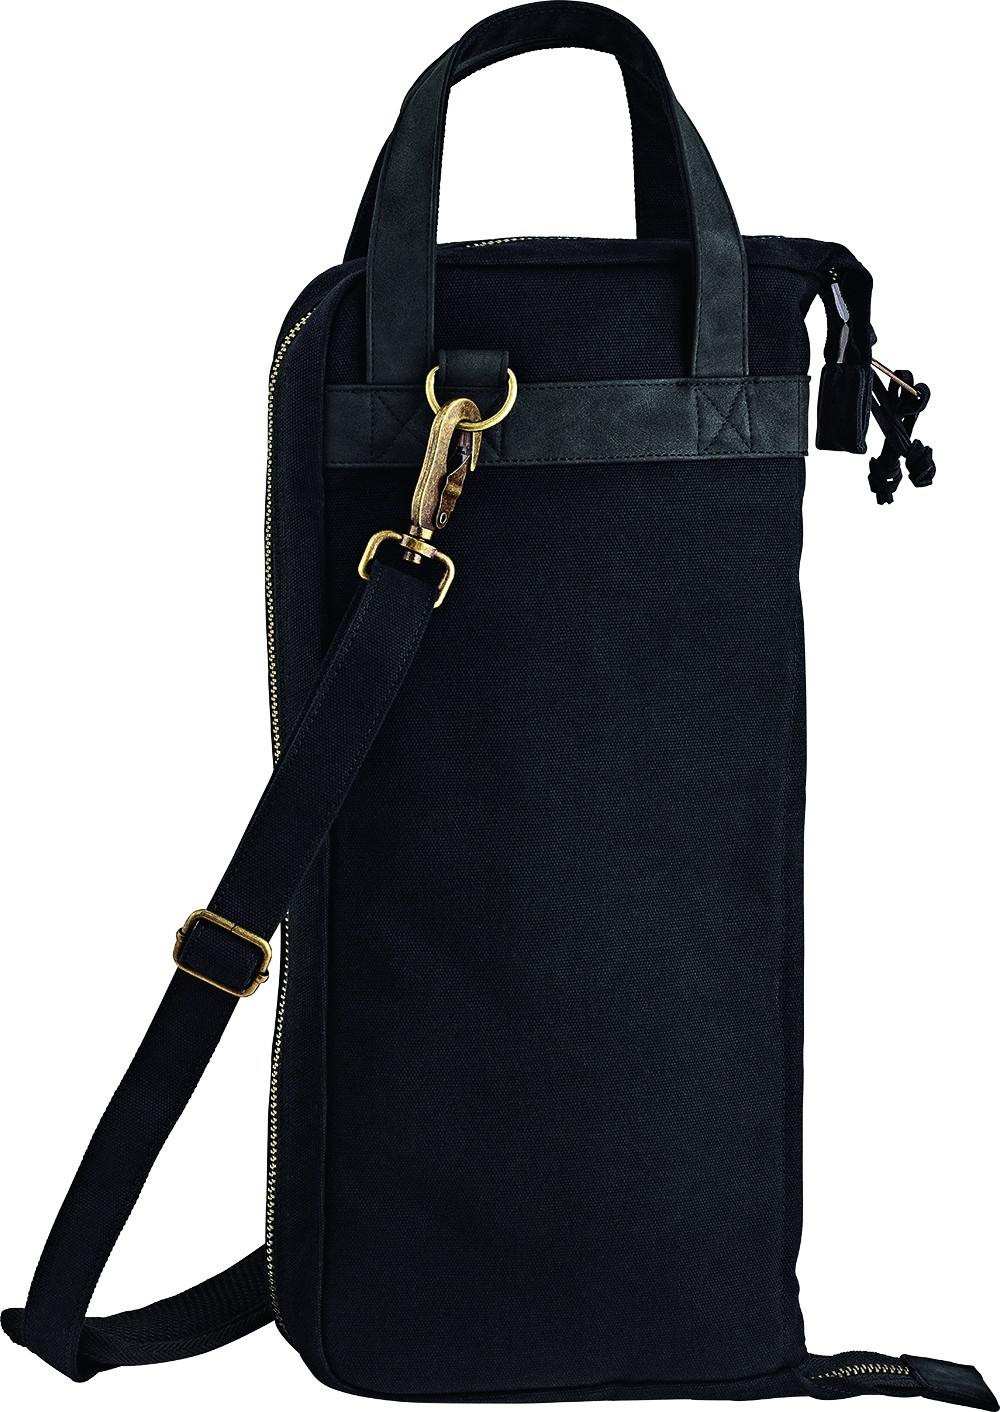 Meinl MWSBK Canvas Stick Bag Classic Black